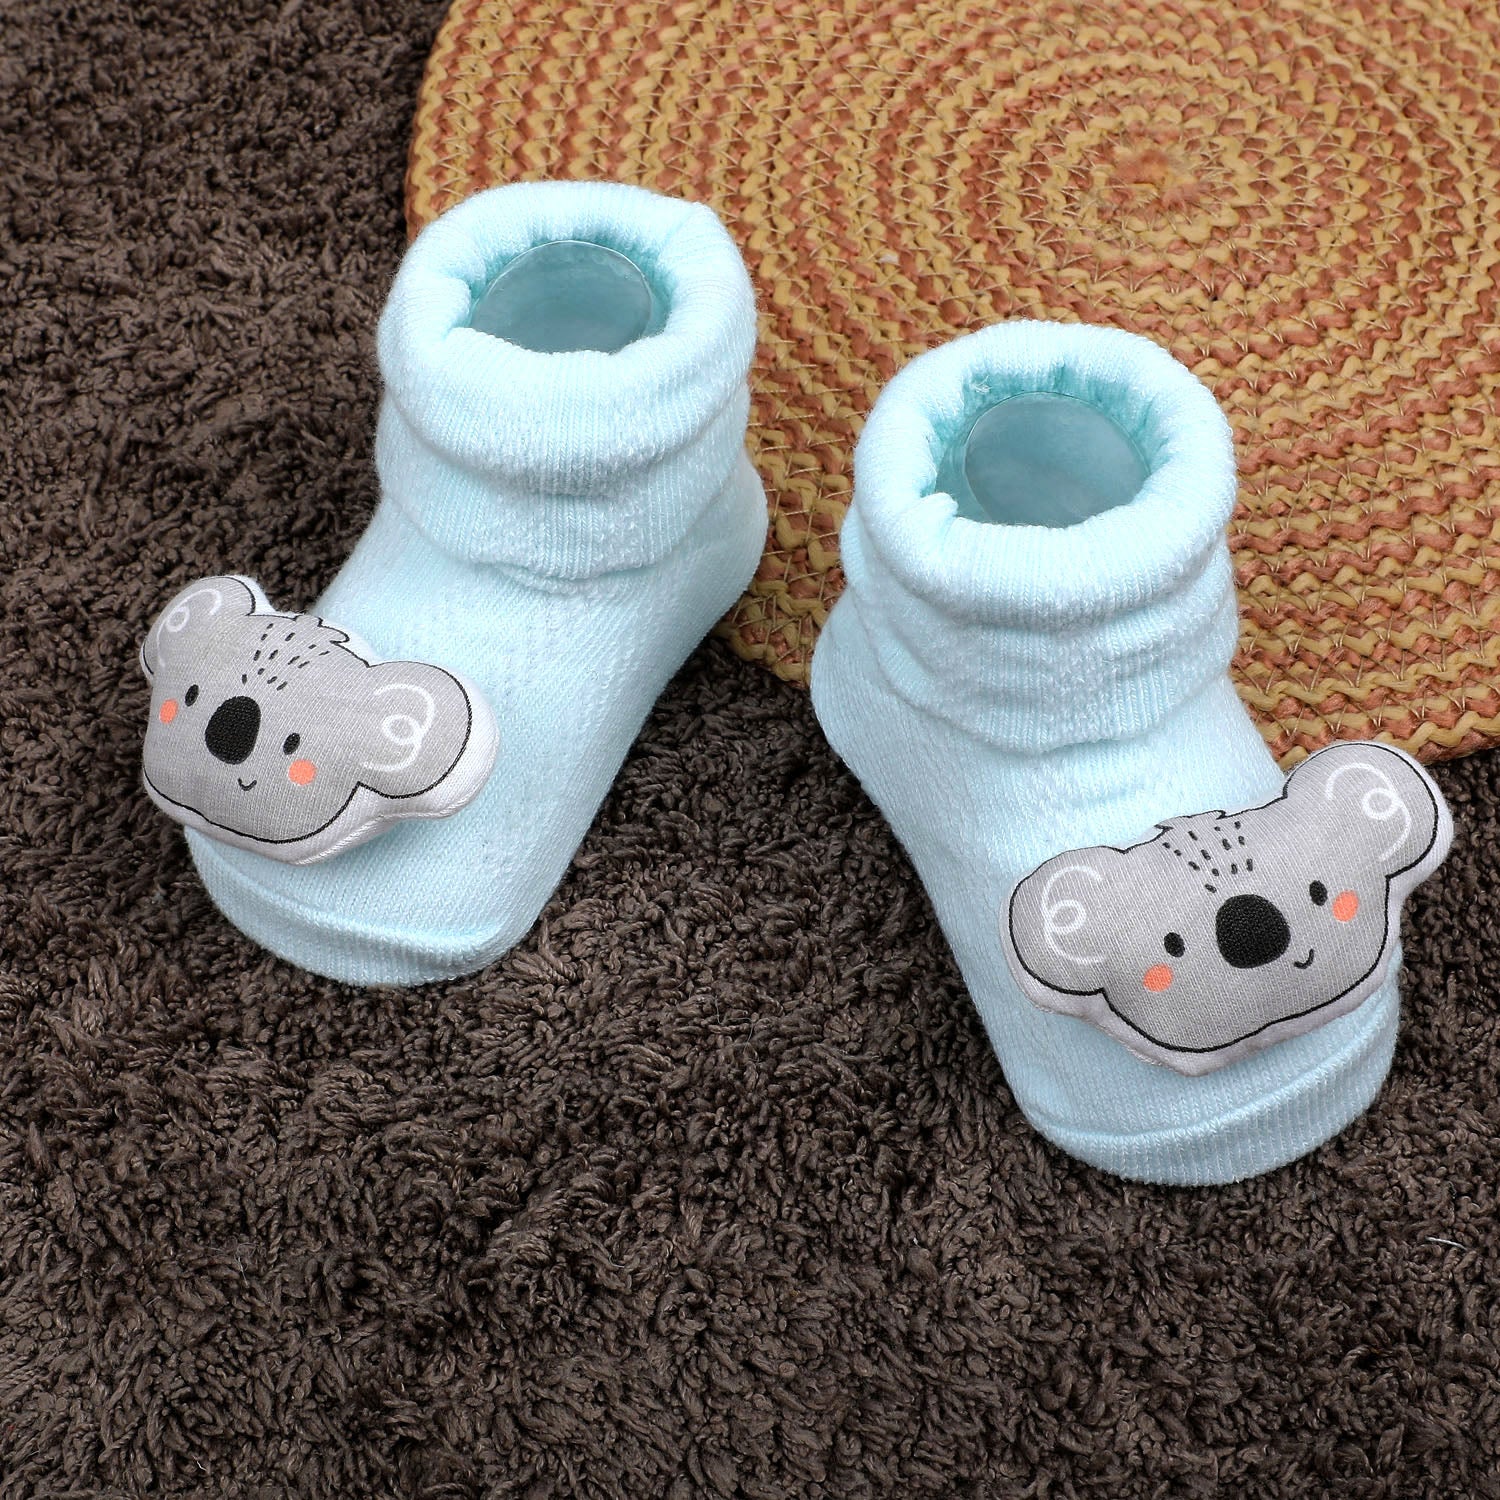 Baby Moo Cute Koala Cotton Anti-Skid 3D Socks - Blue - Baby Moo